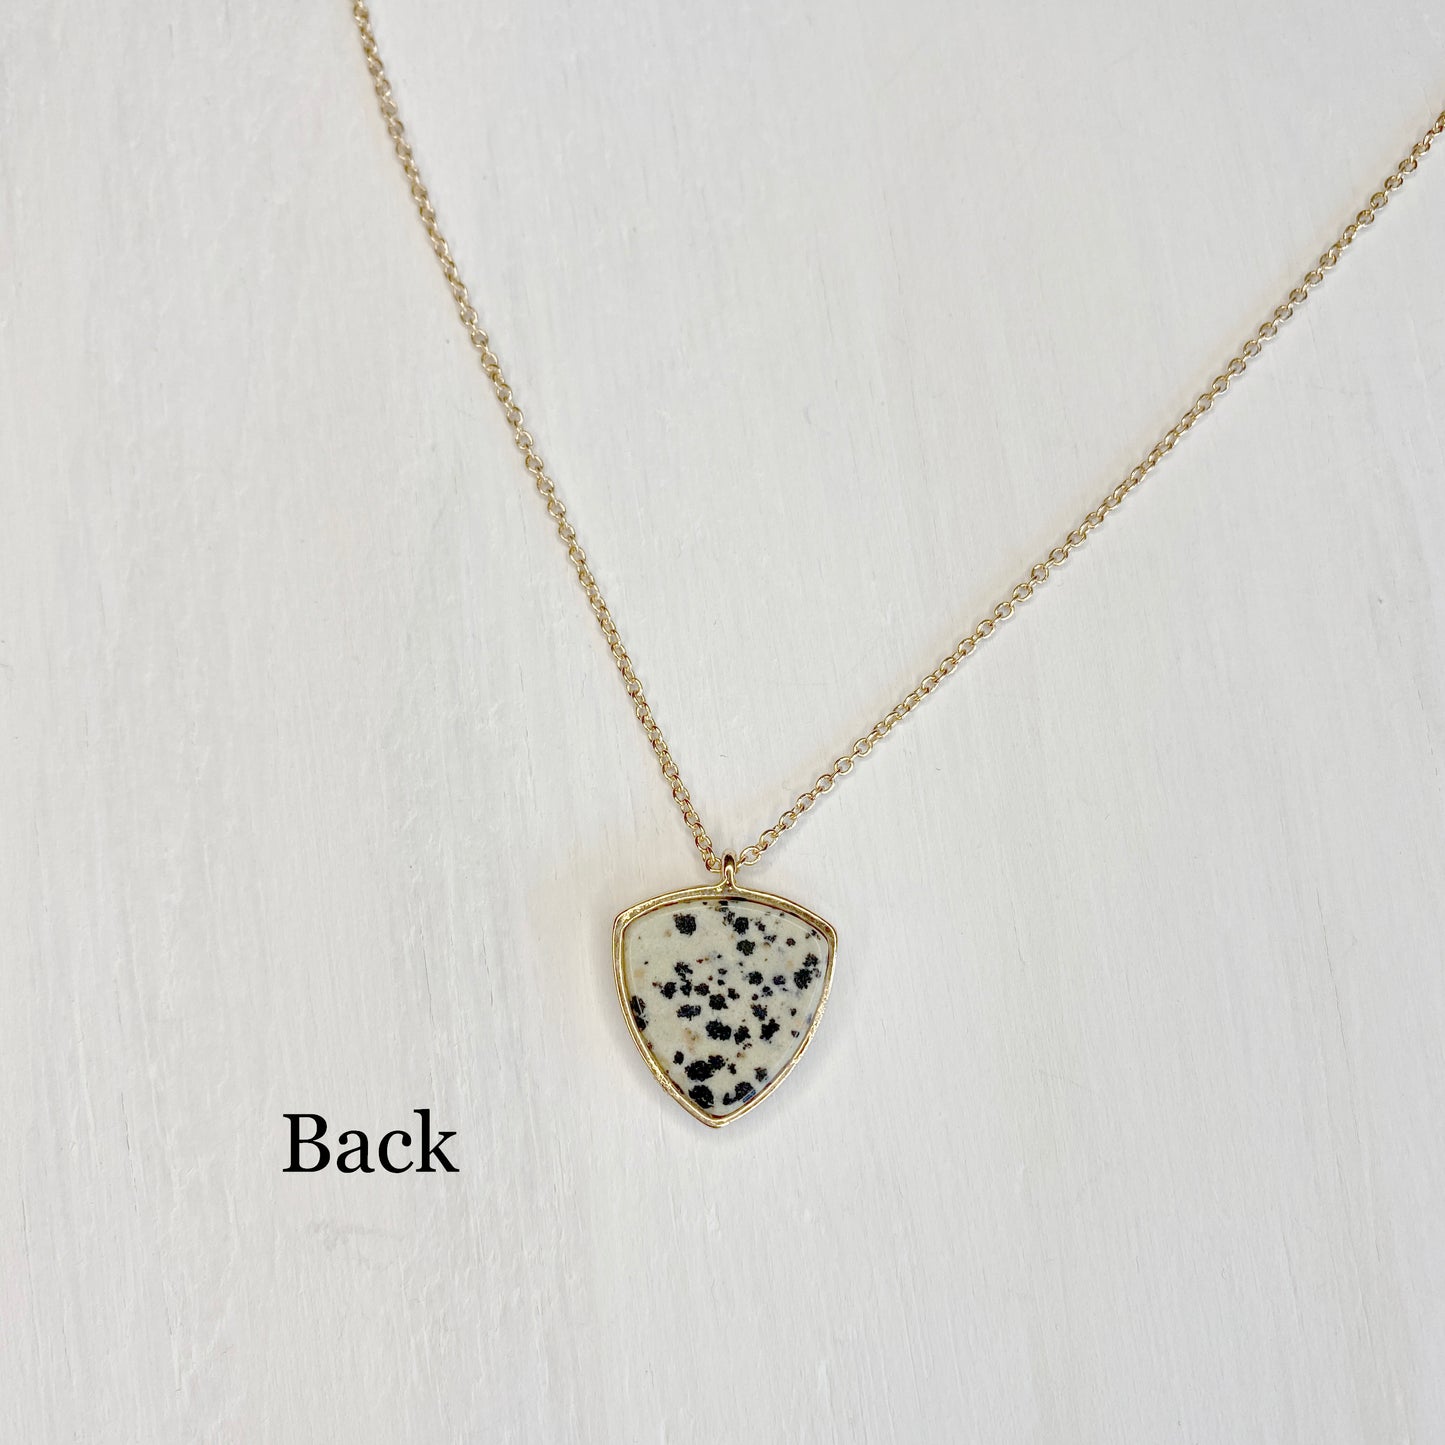 Dalmatian Semiprecious Stone Necklace with Rhinestones Necklace.